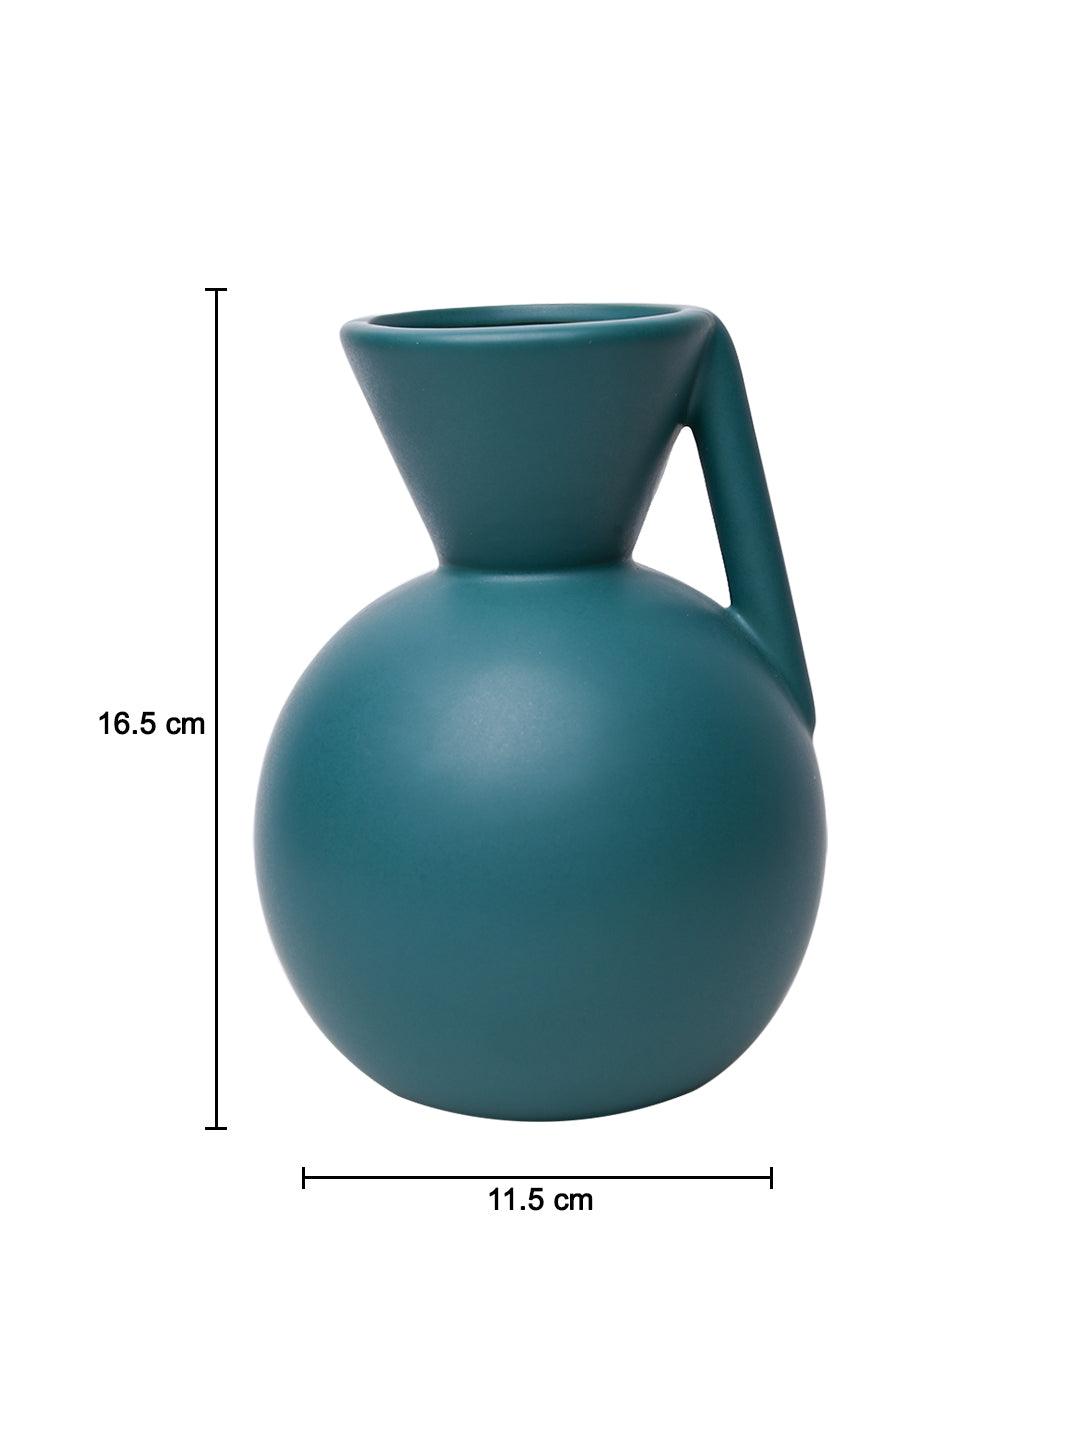 Deep Sea Green Decorative Vase - MARKET 99